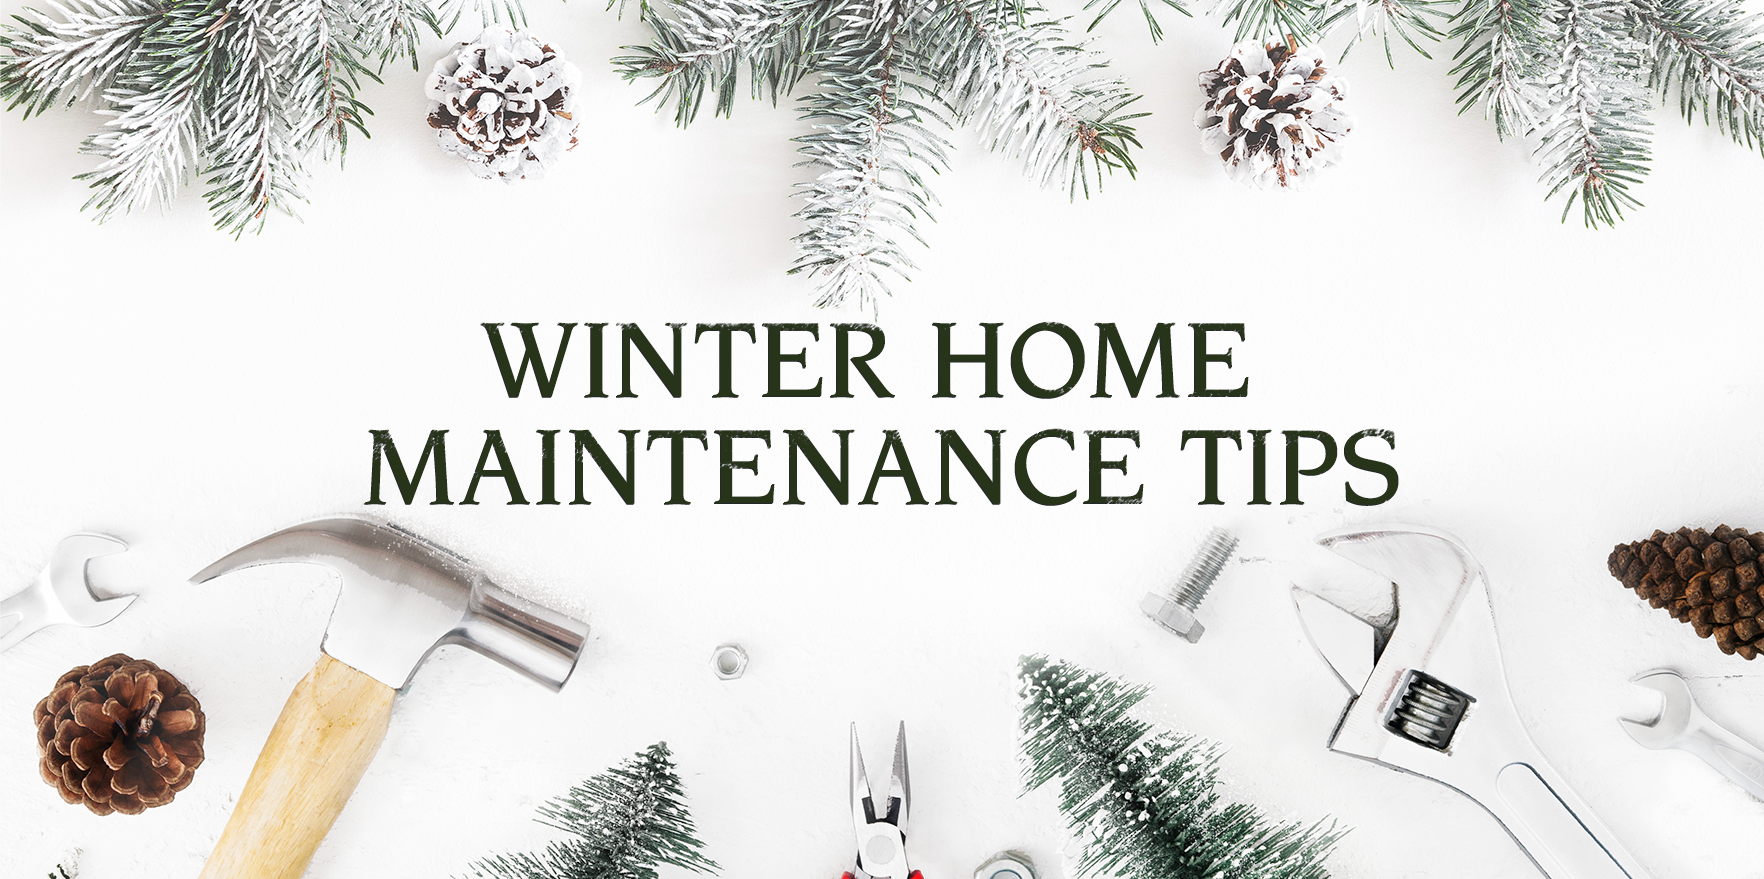 CRG Winter Home Maintenance